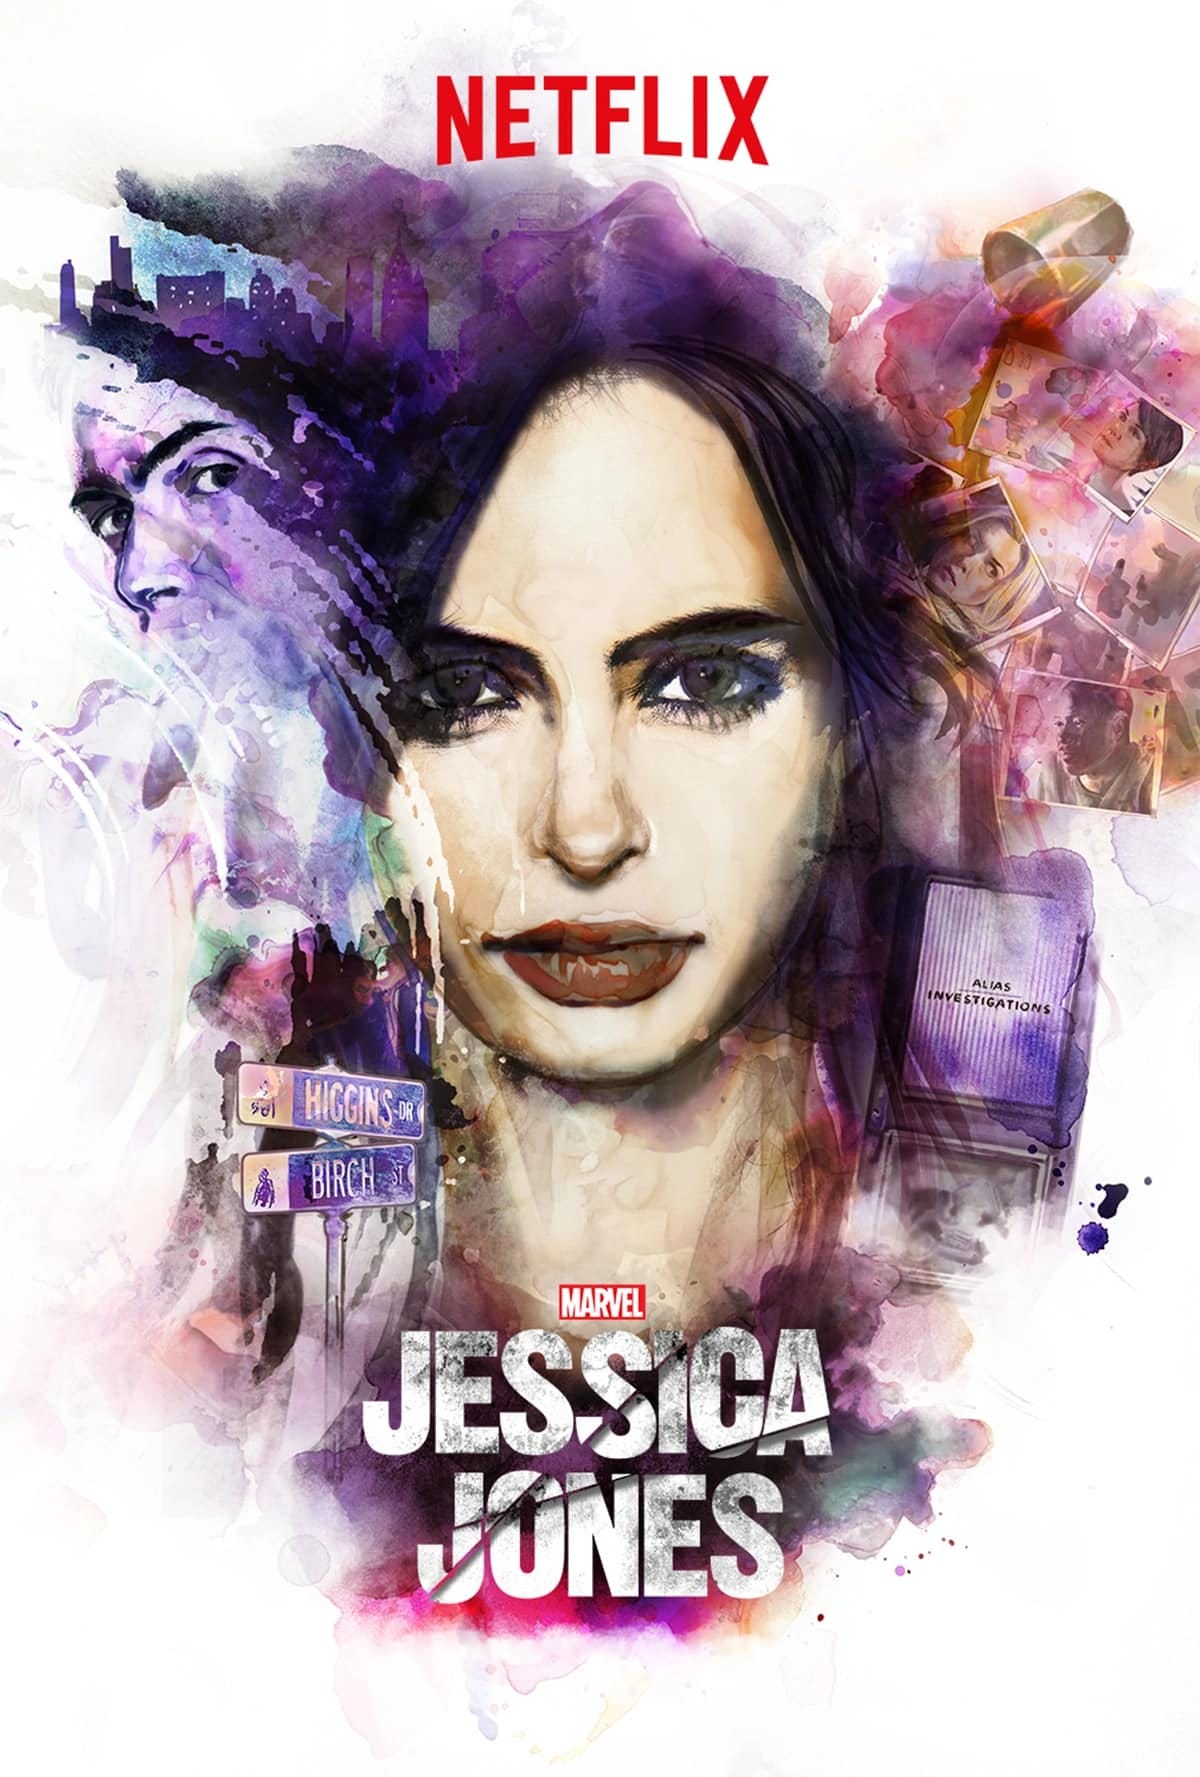 A Netflix poster for season 1 of Jessica Jones.